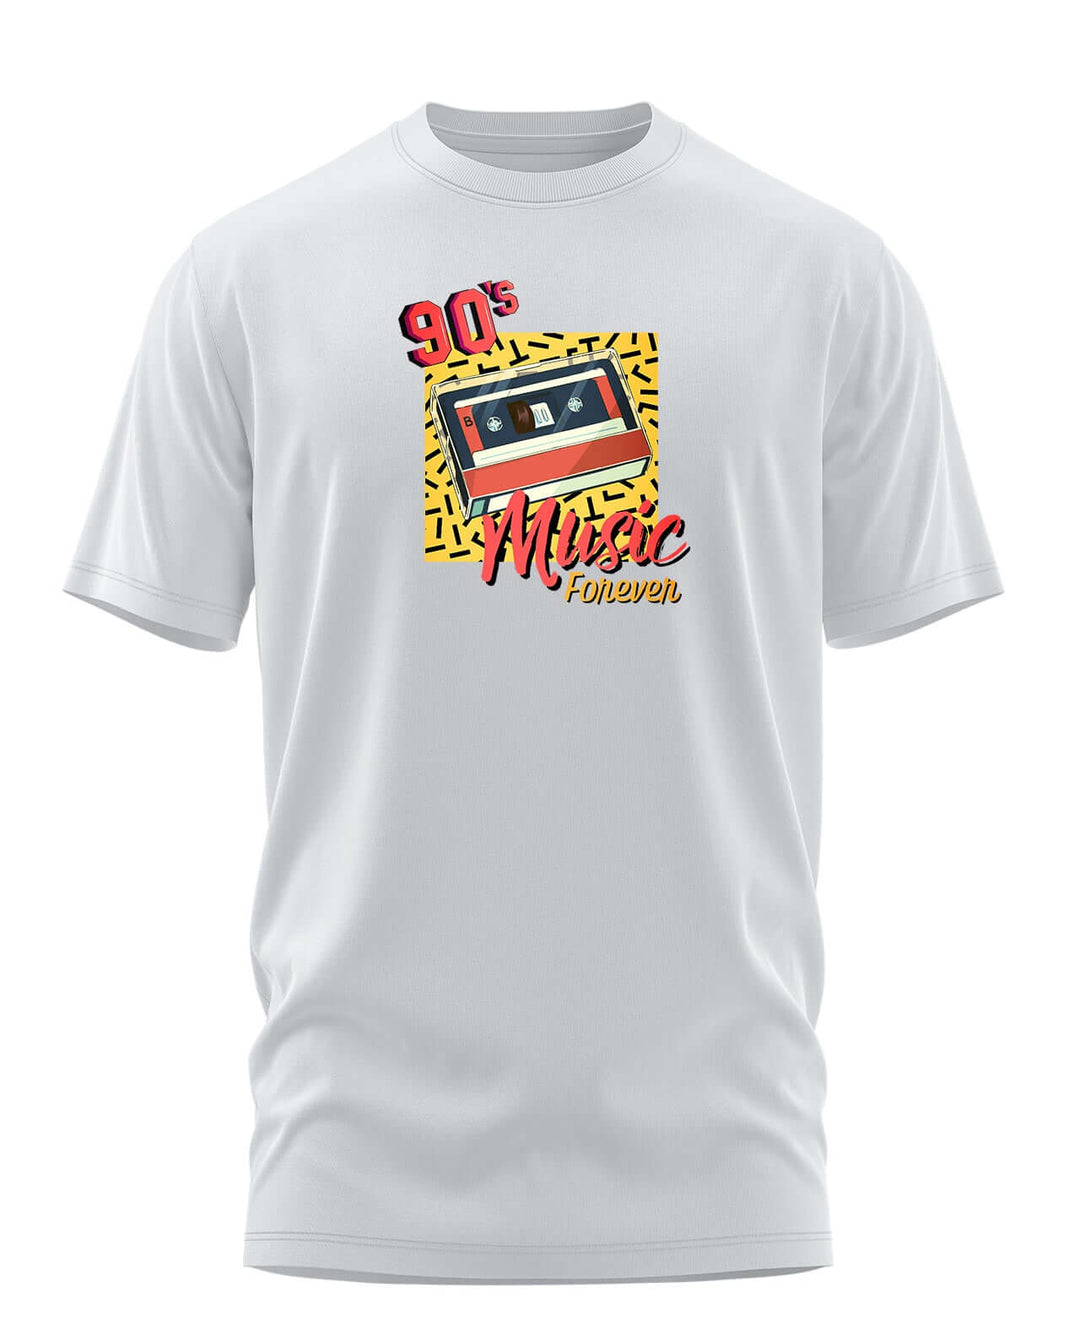 Trinizen 90's Music unisex cotton T-shirt